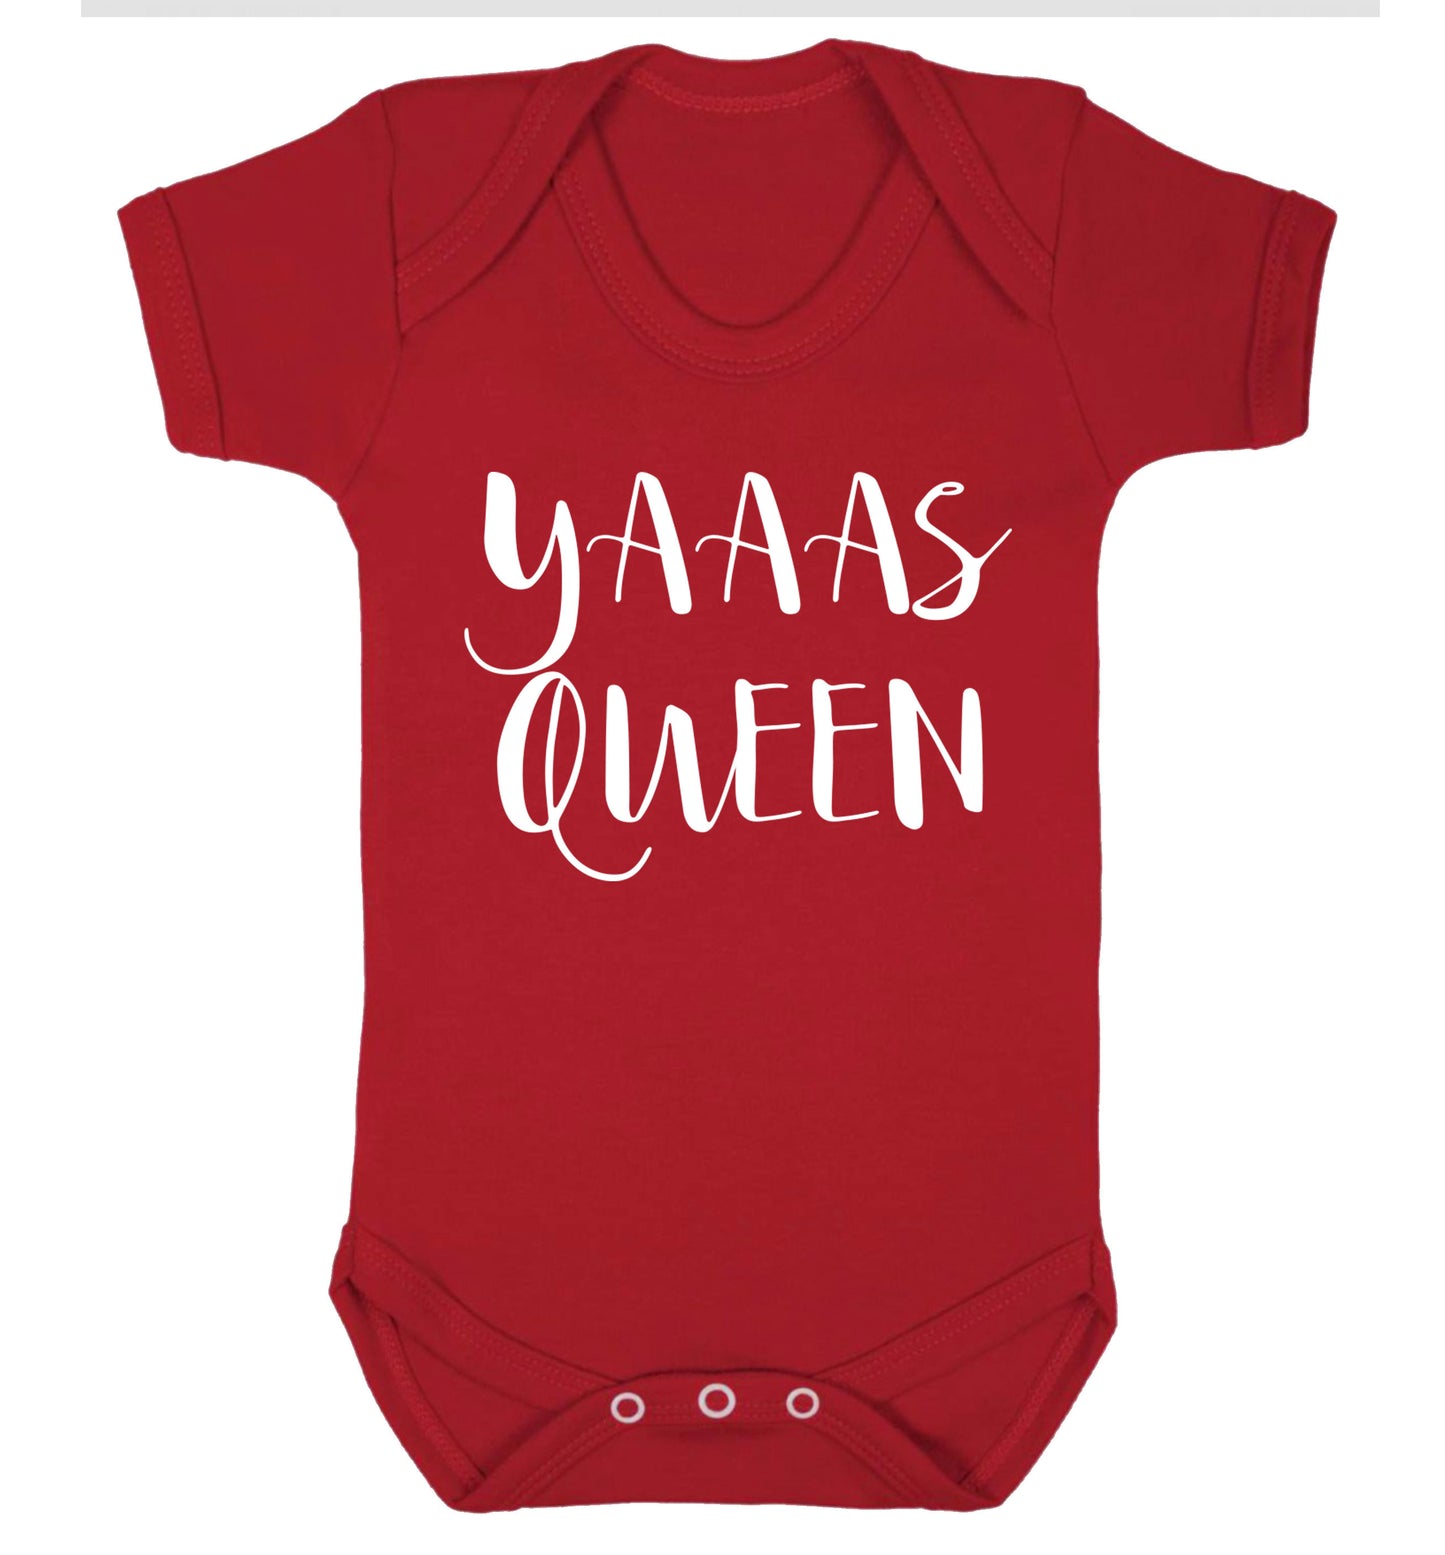 Yas Queen Baby Vest red 18-24 months